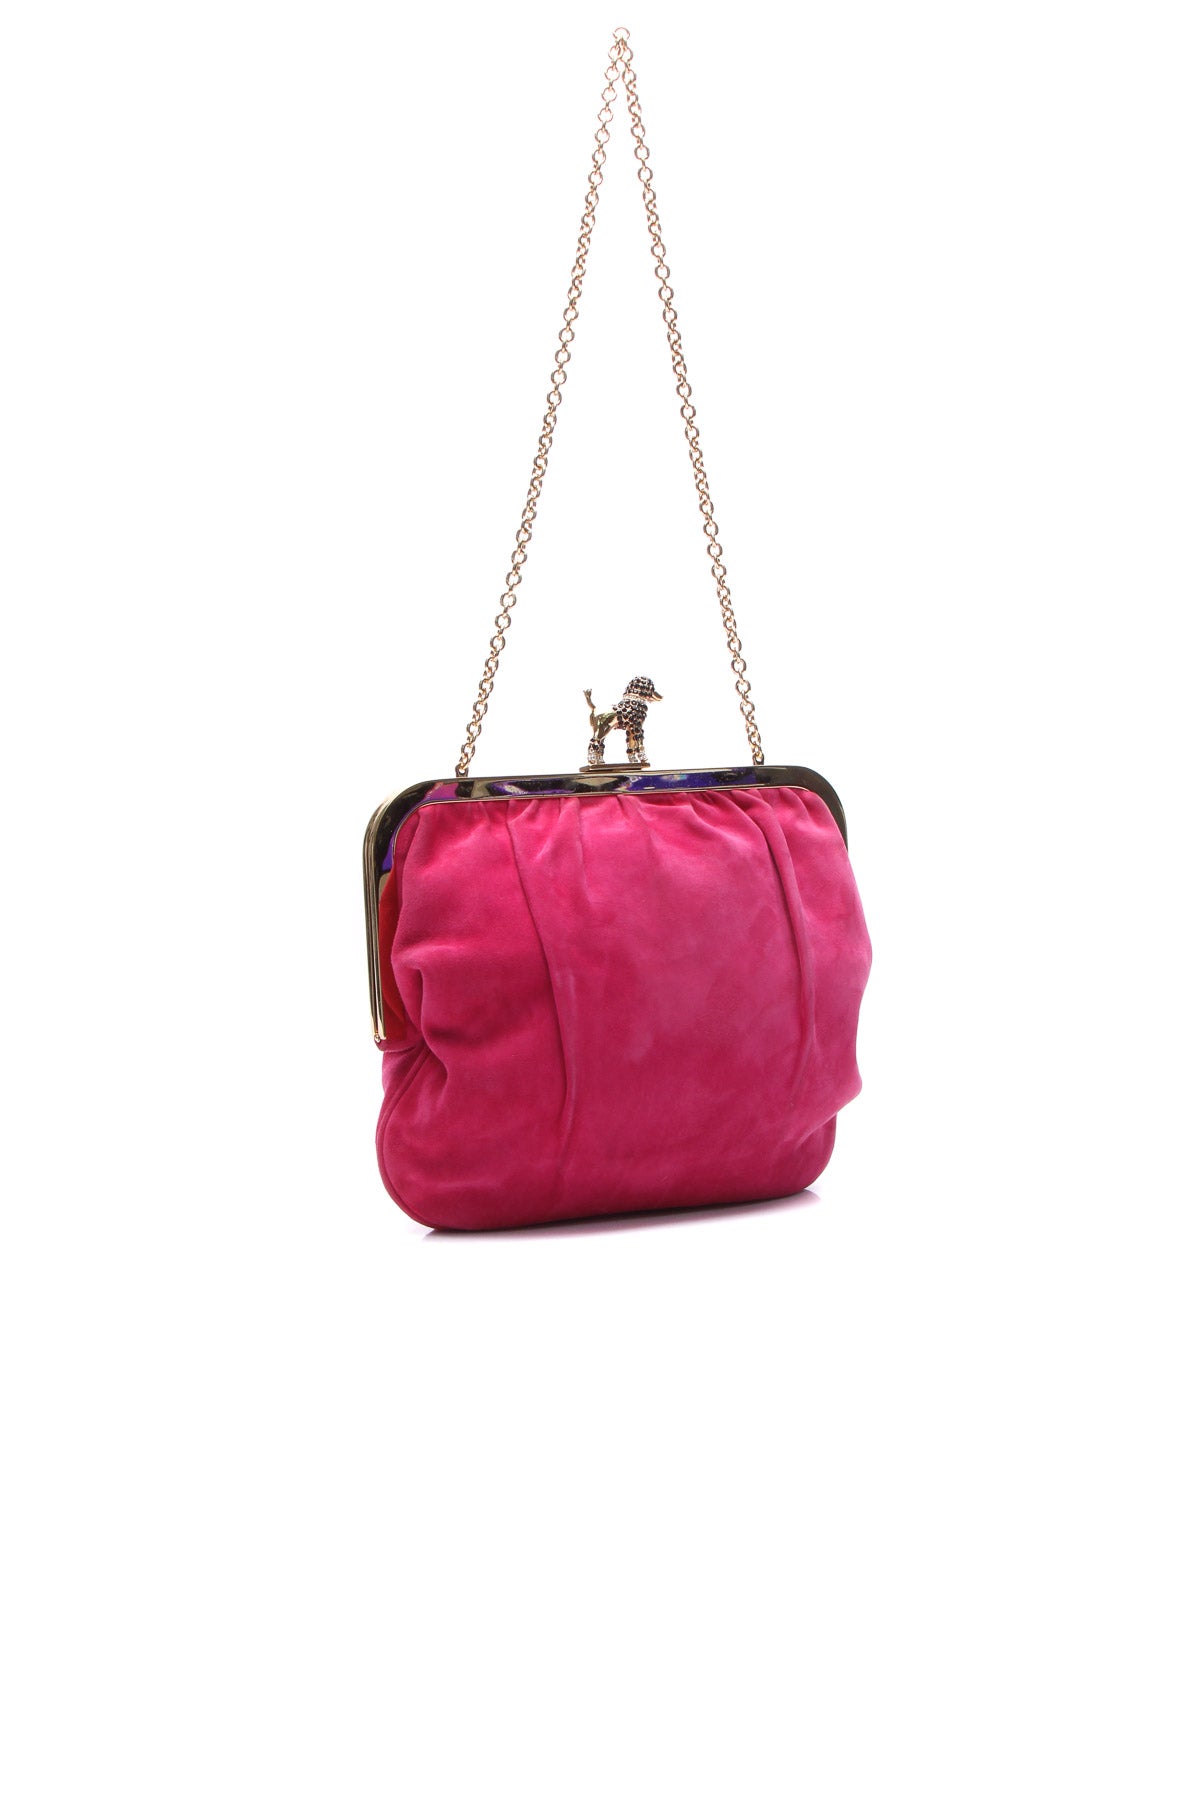 Crystal Poodle Clasp Bag